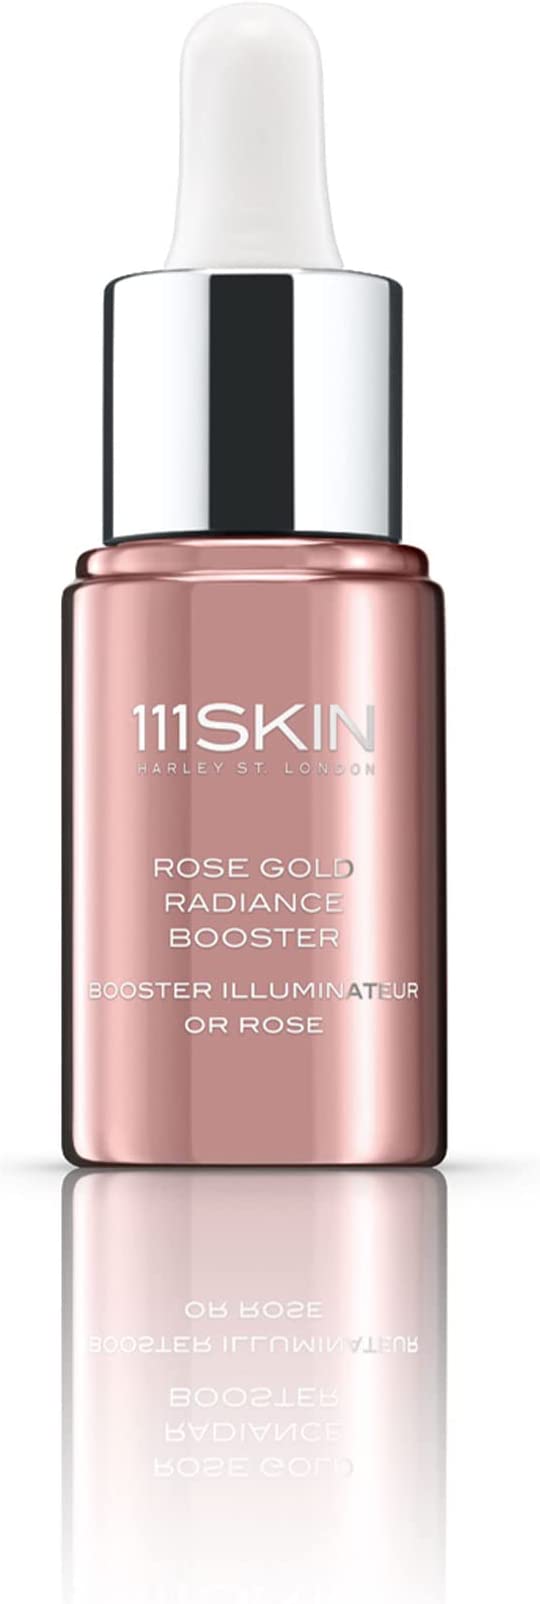 111SKIN HARLEY ST. London Rose Gold Radiance Booster 20 مل اشتري اونلاين بأفضل الاسعار111SKIN HARLEY ST. London Rose Gold Radiance Booster 20 مل✓ شحن سريع و مجاني✓ ارجاع مجاني✓ الدفع عند